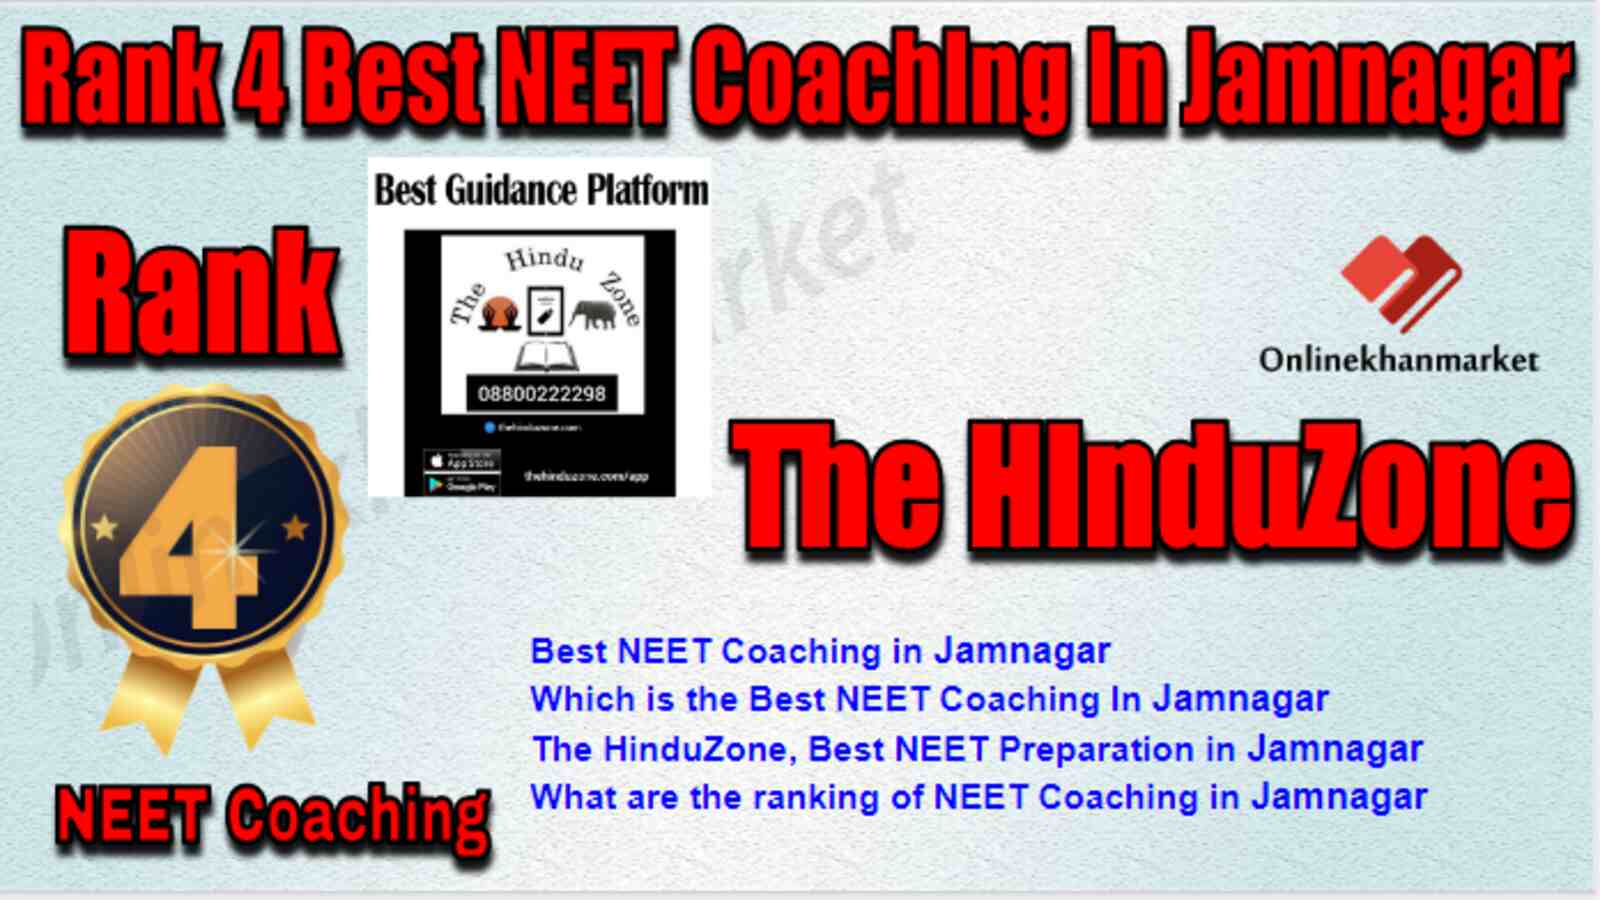 Rank 4 Best NEET Coaching in Jamnagar